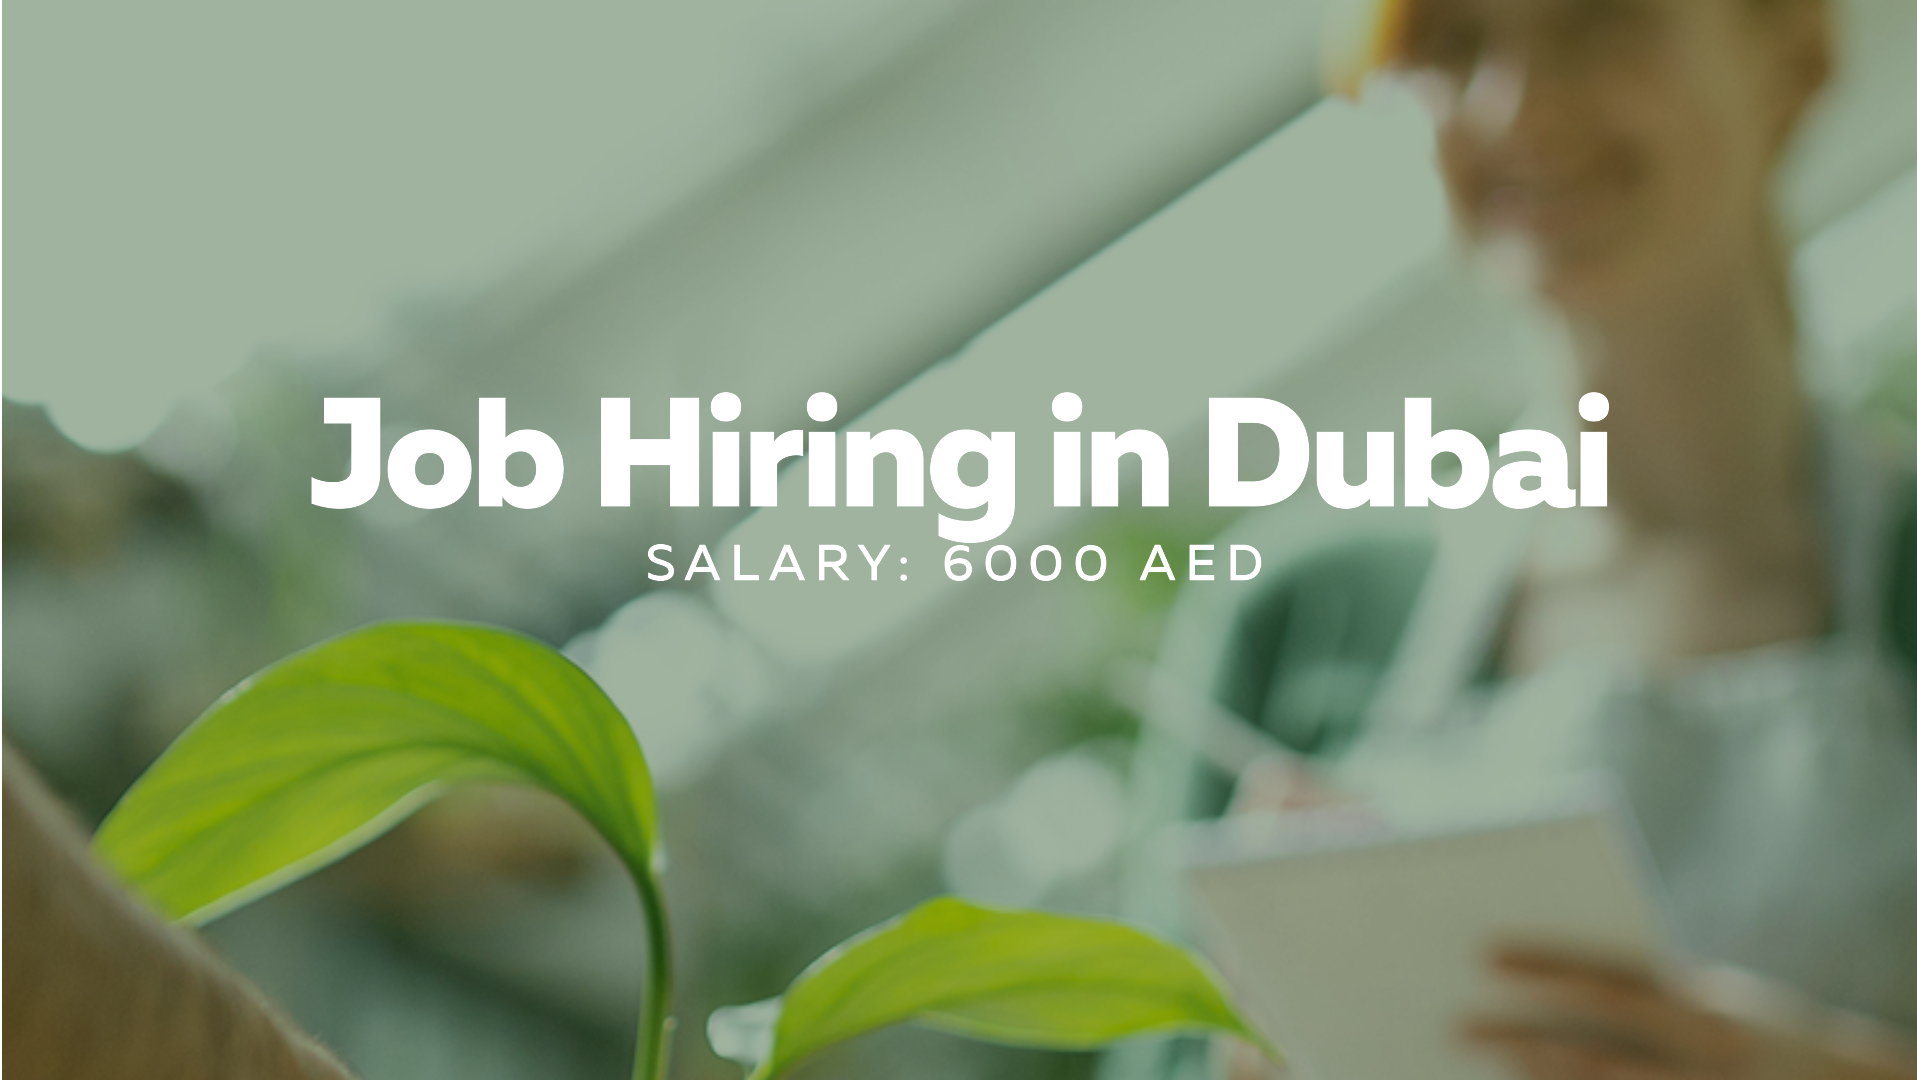 Job hiring Dubai with salary 6000 AED